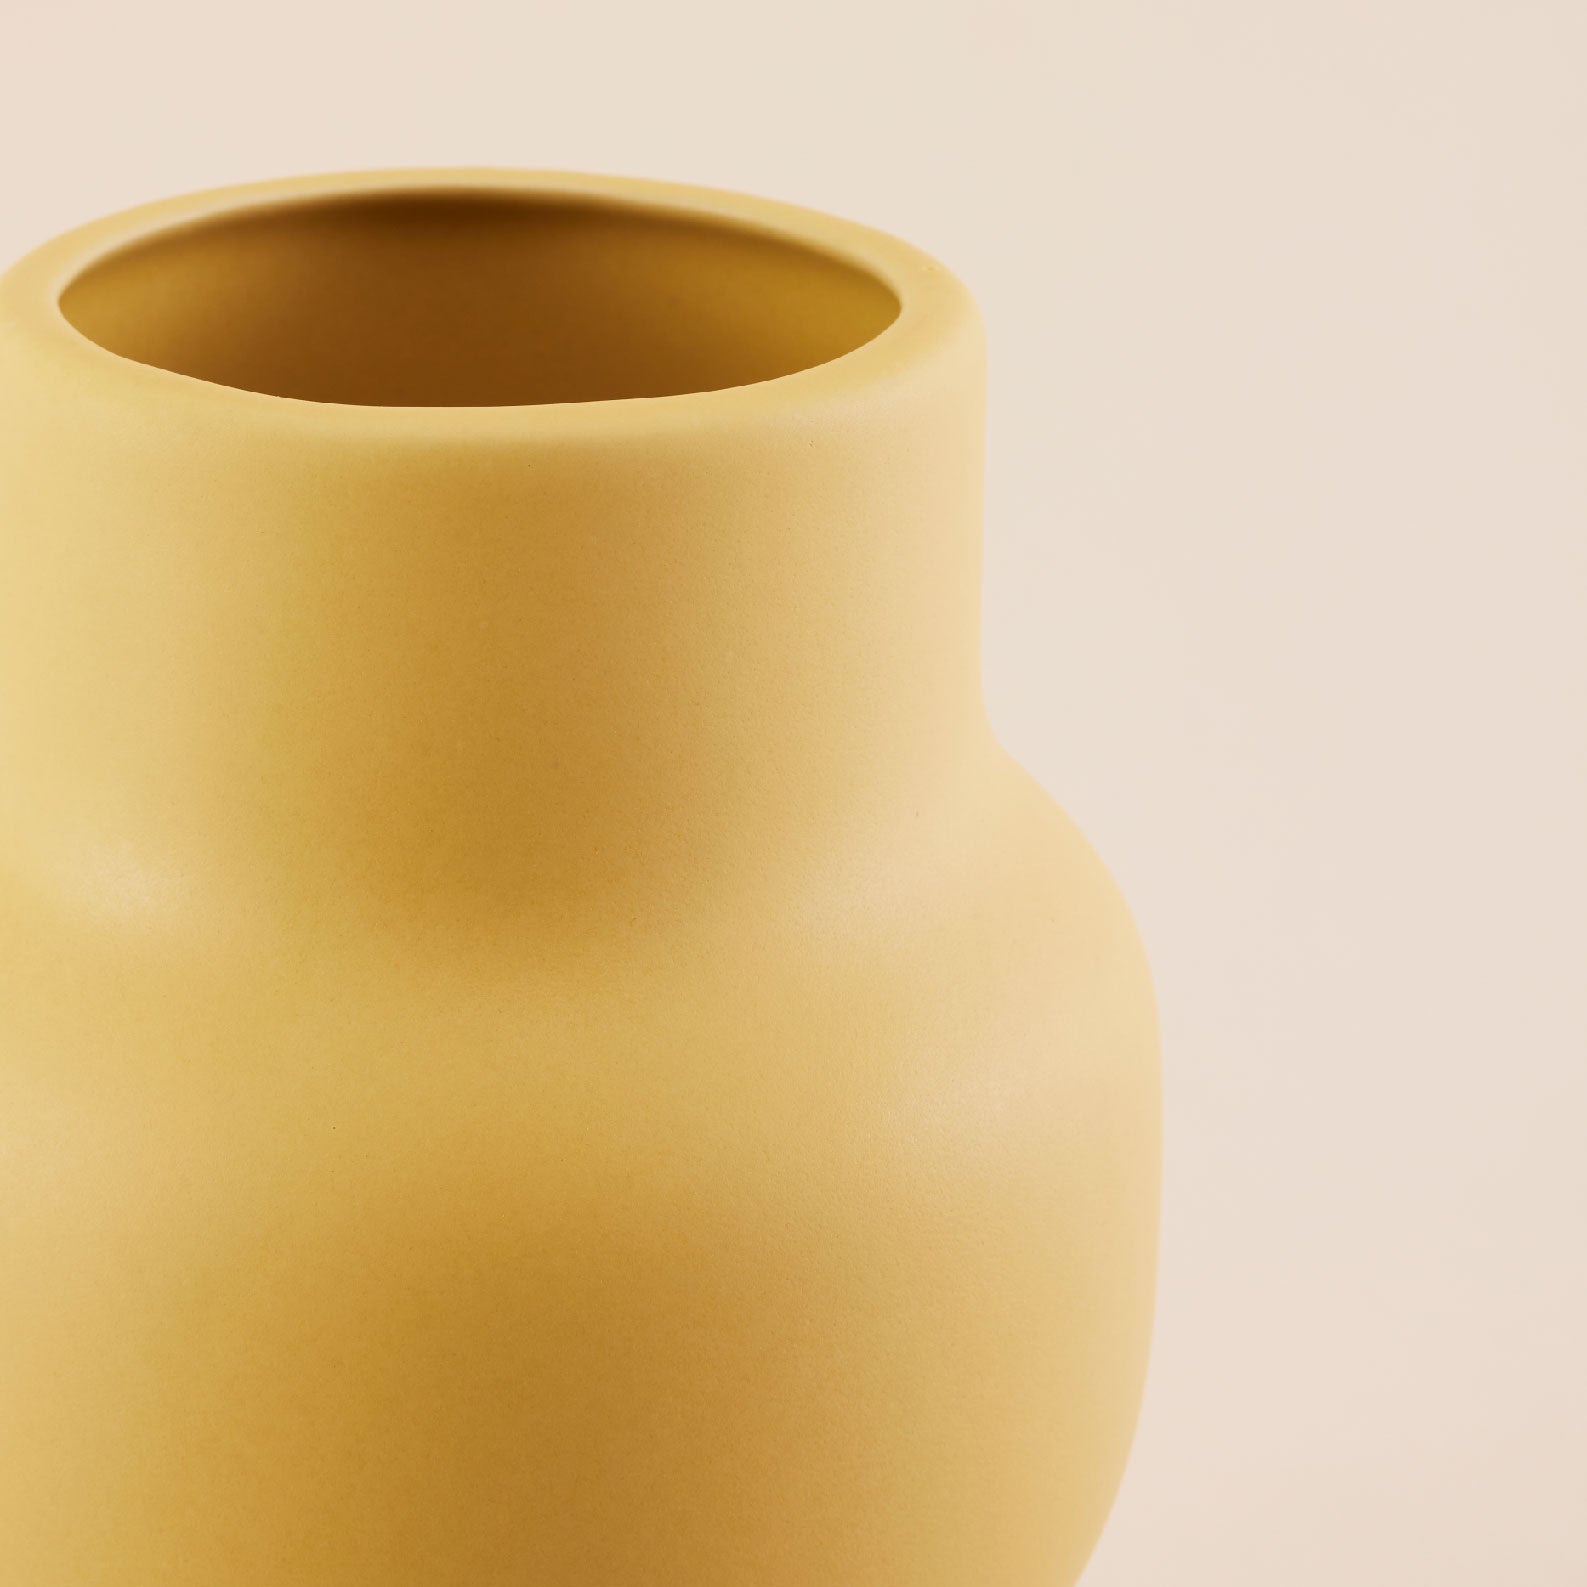 Yellow Porcelain Vase | แจกัน เซรามิก